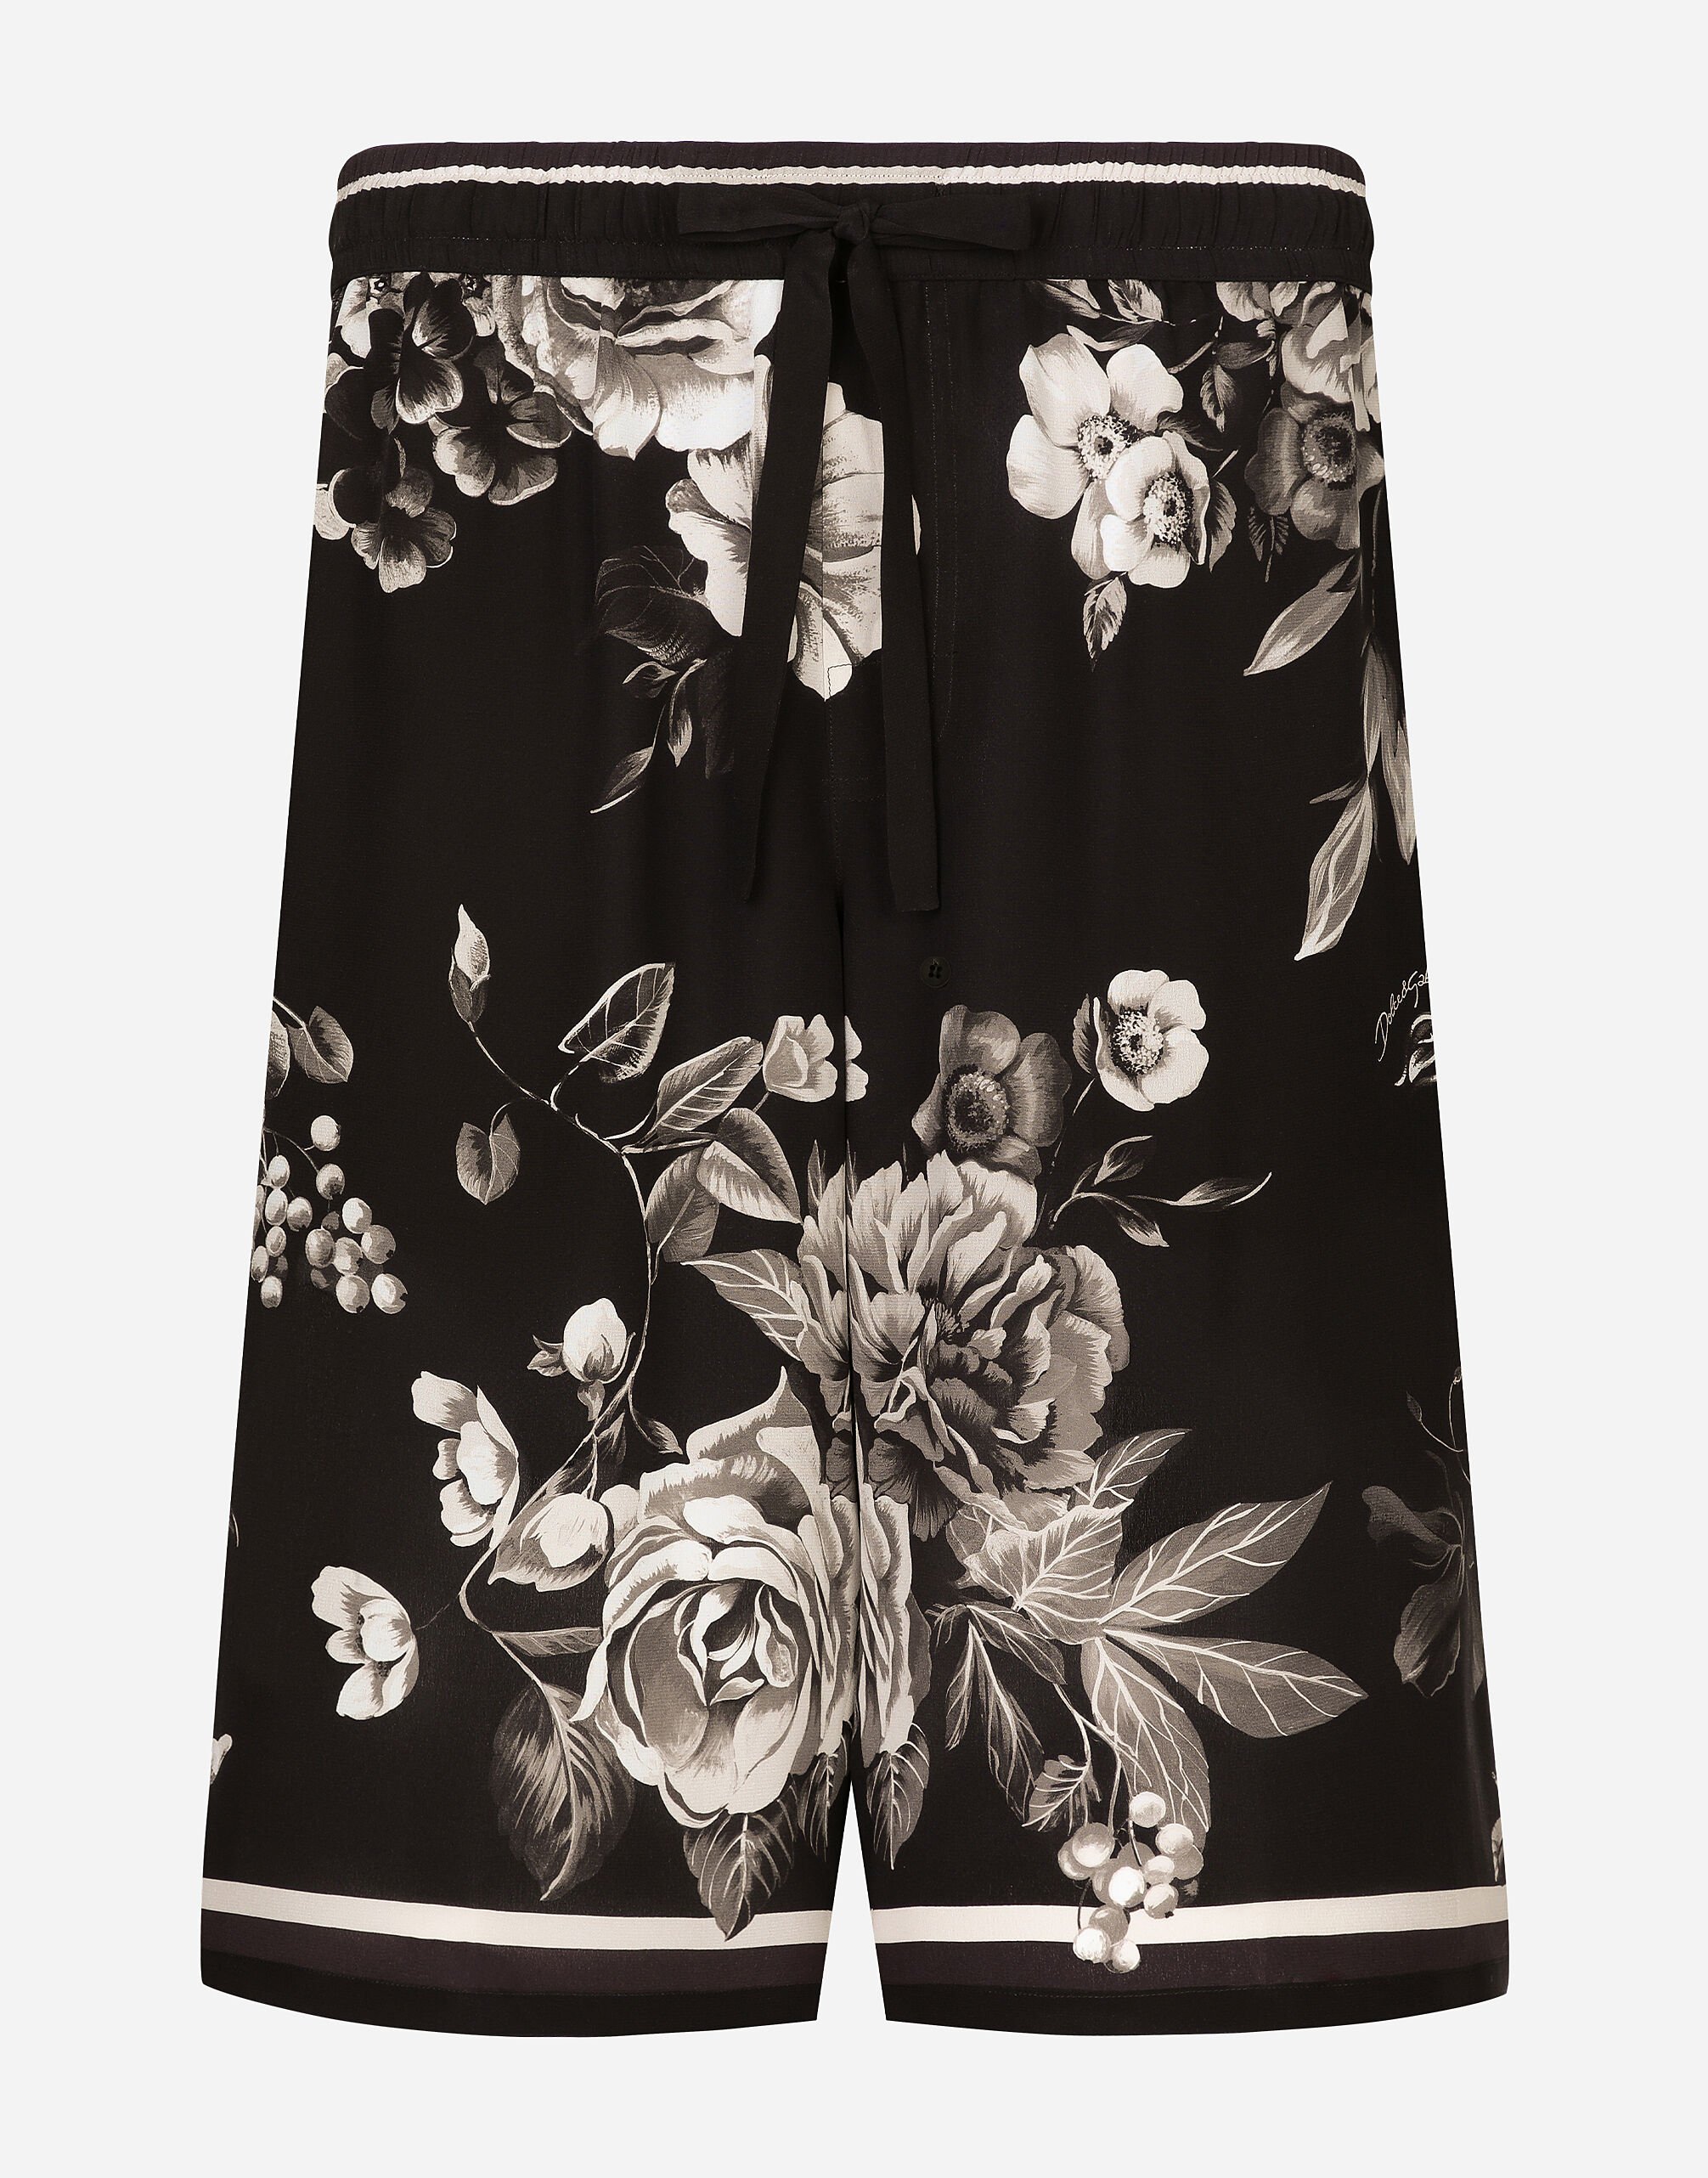 Dolce & Gabbana شورت للركض حرير بطبعة زهور متعدد الألوان GY6UETFR4BP